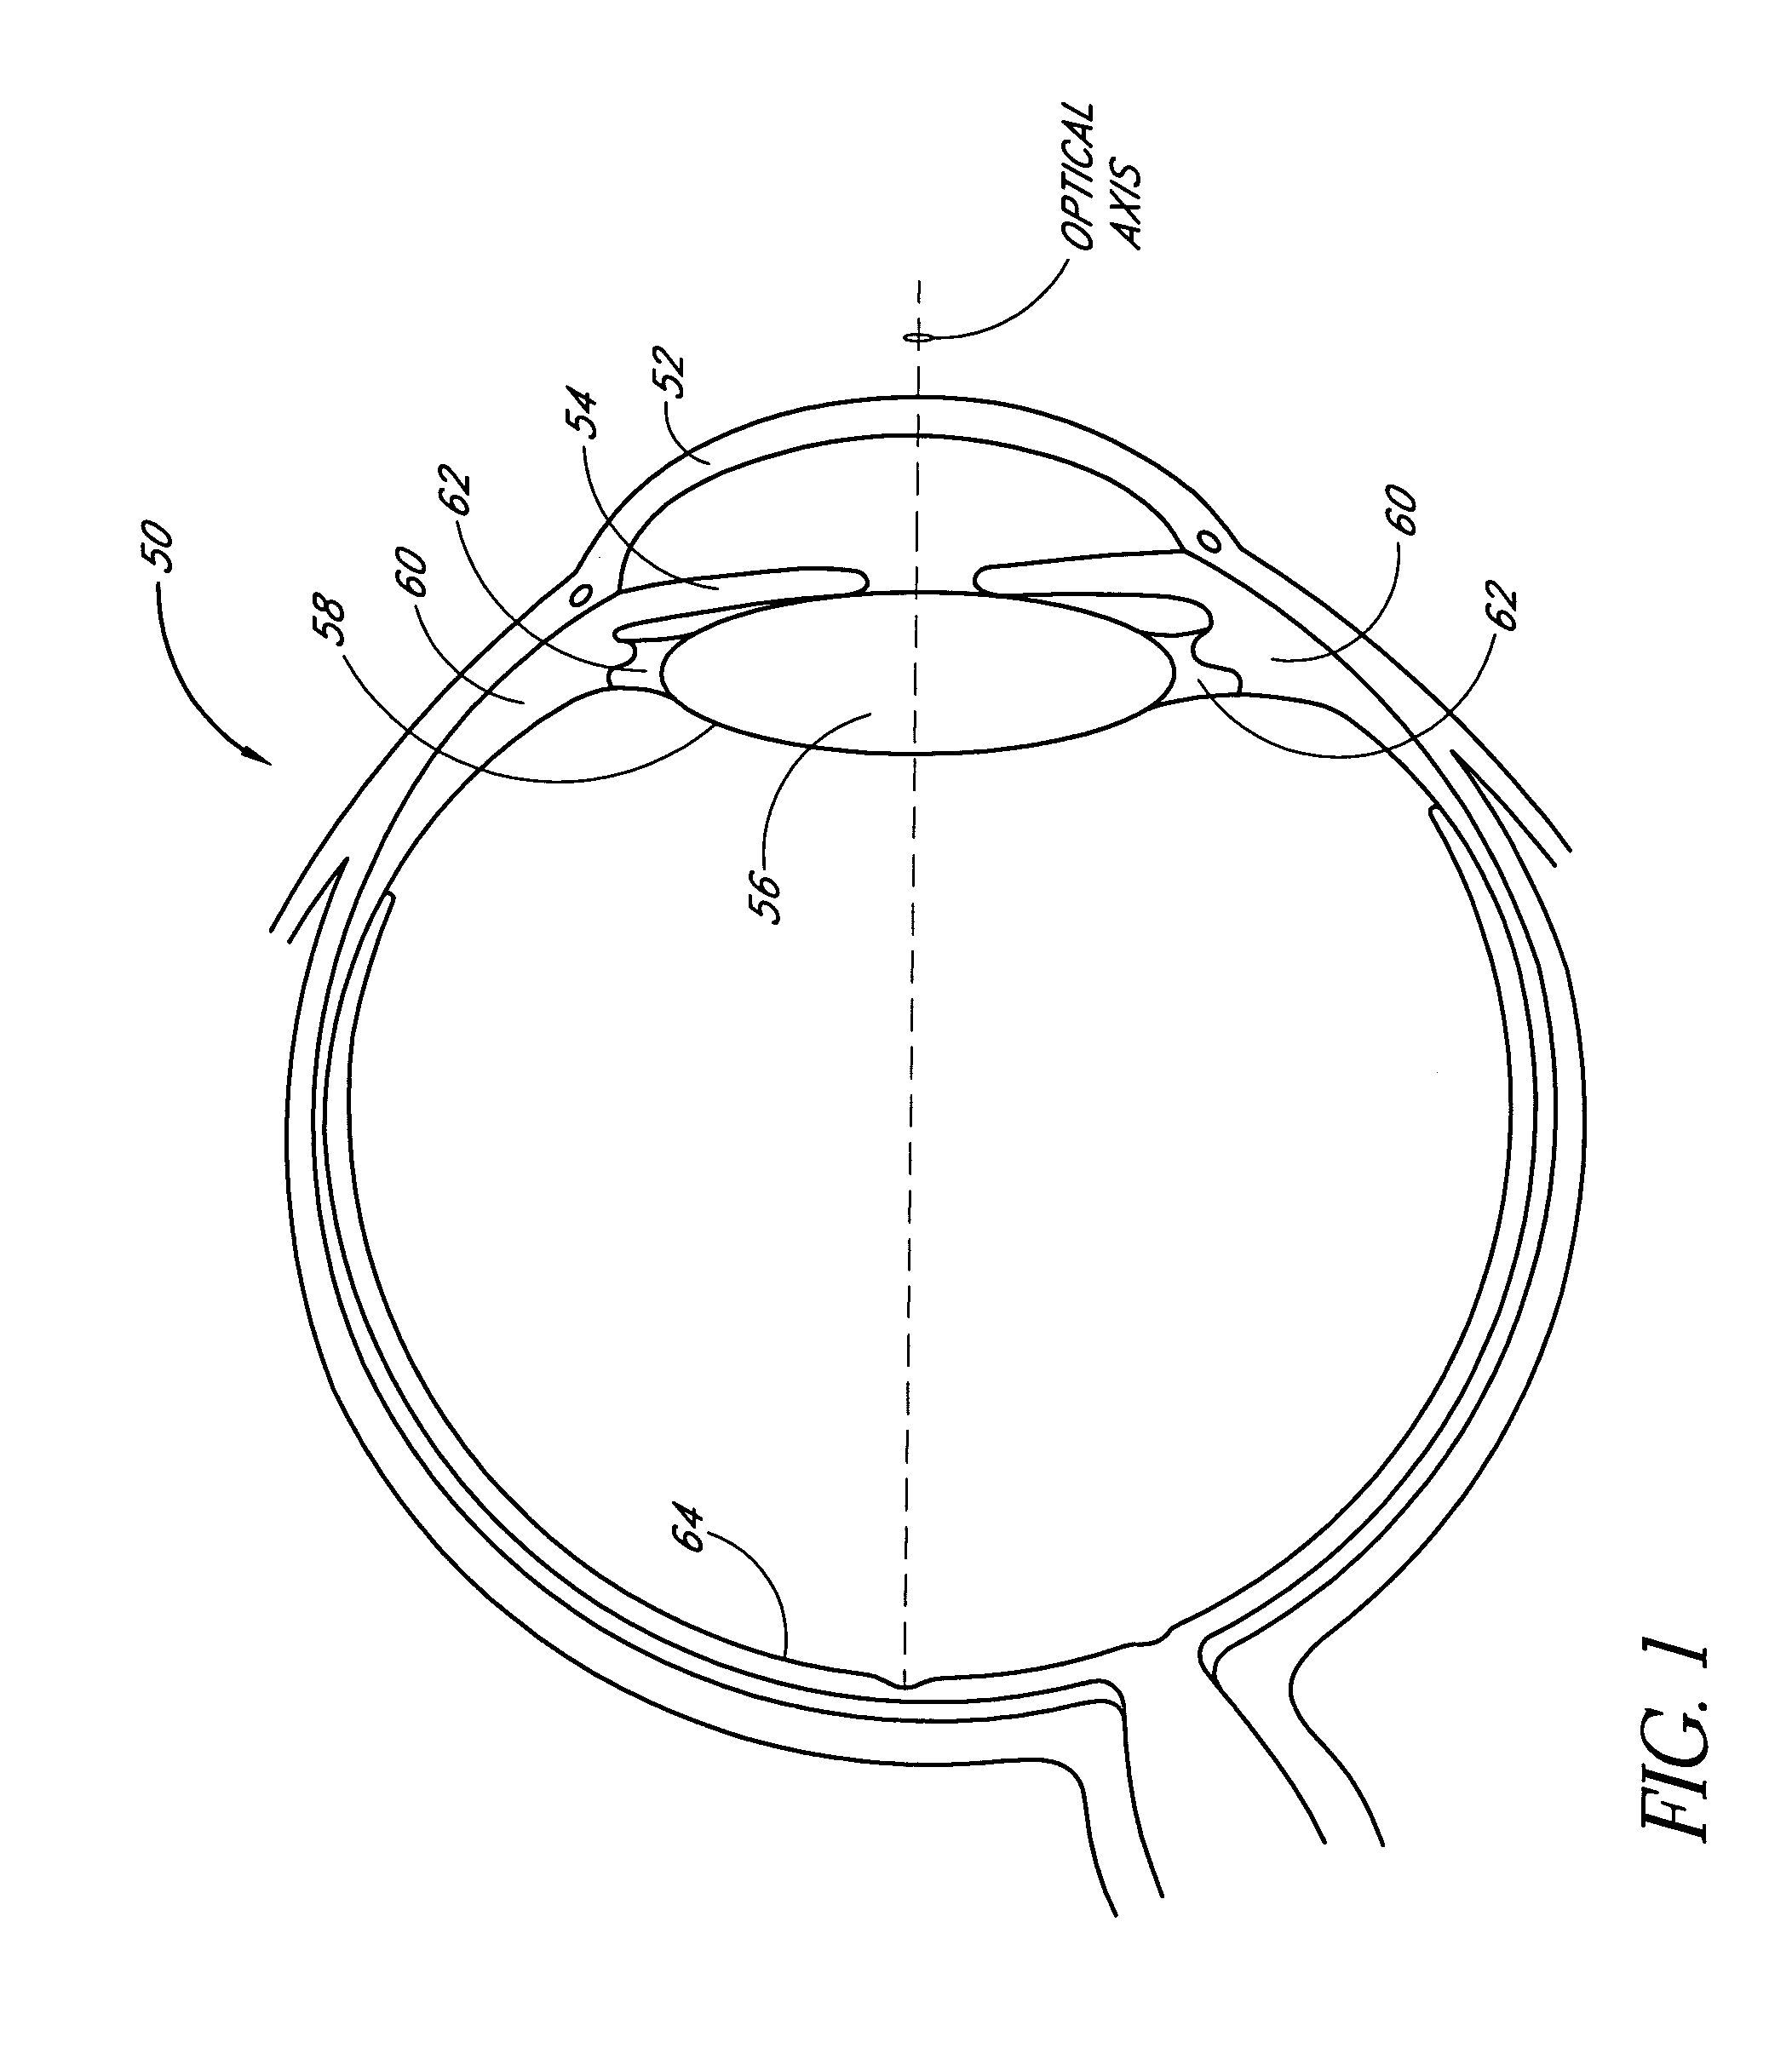 Method of implanting an intraocular lens